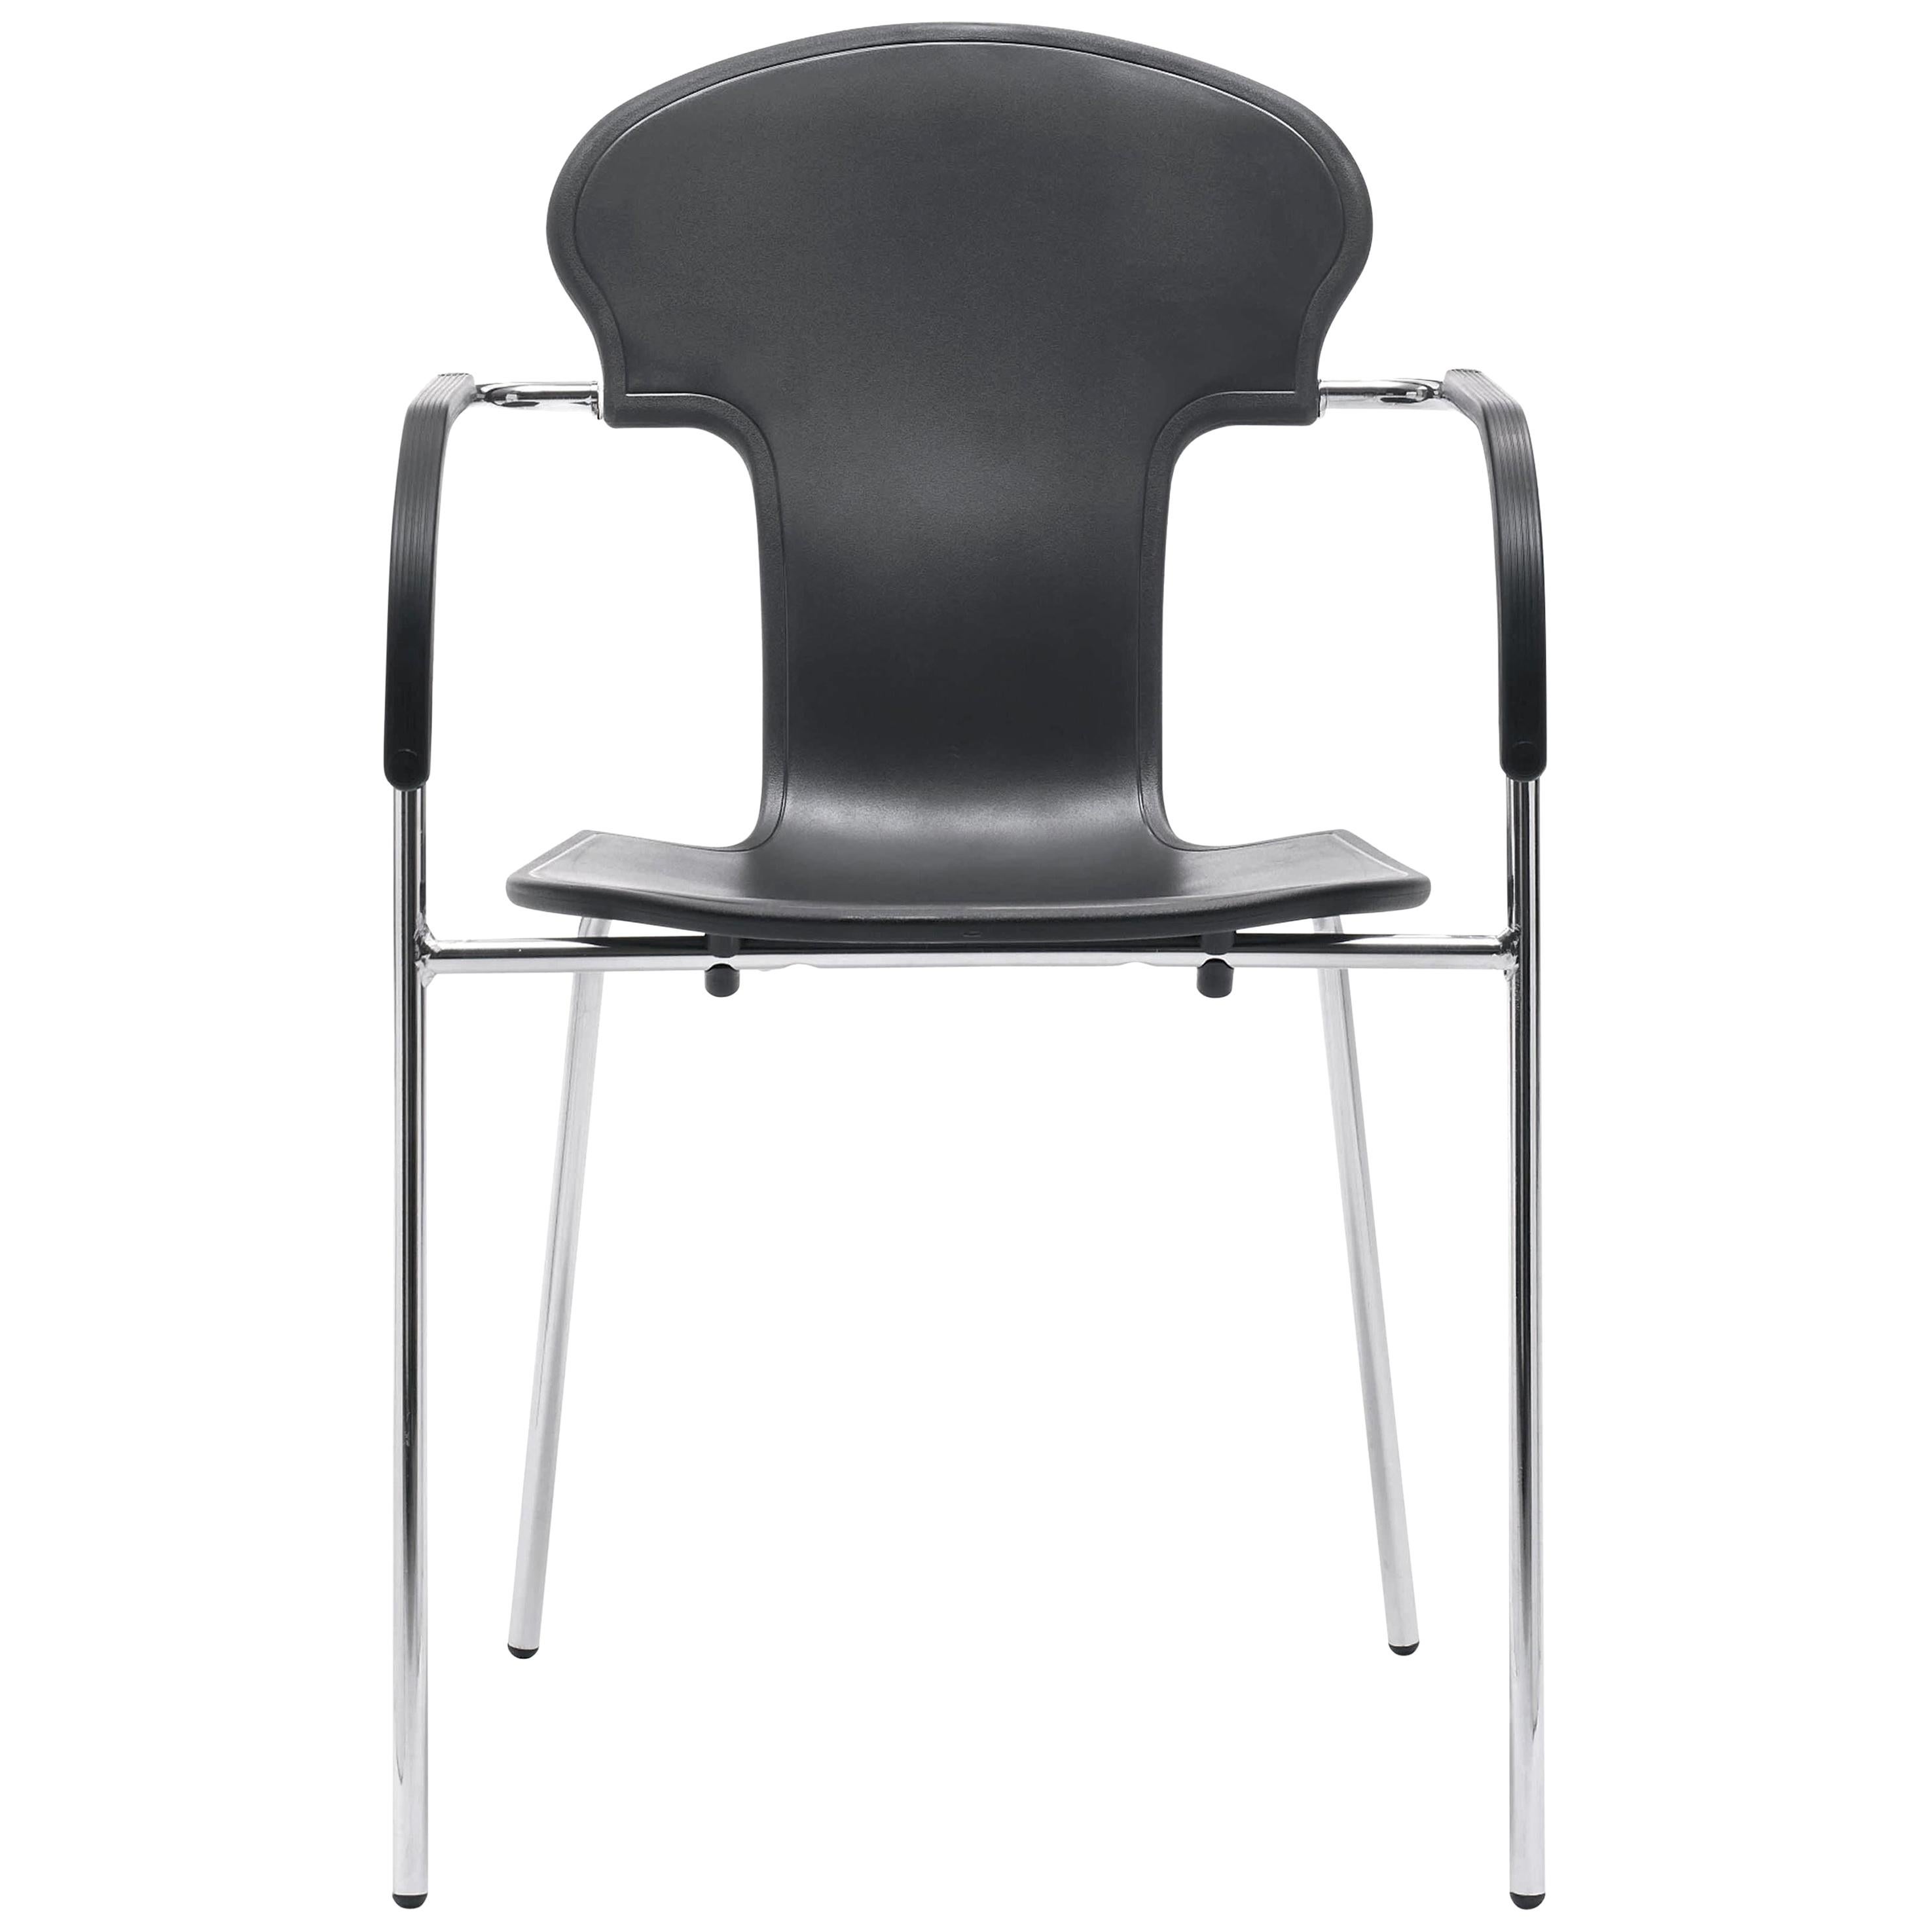 Oscar Tusquets Black Minivarius Chair and by BD Barcelona